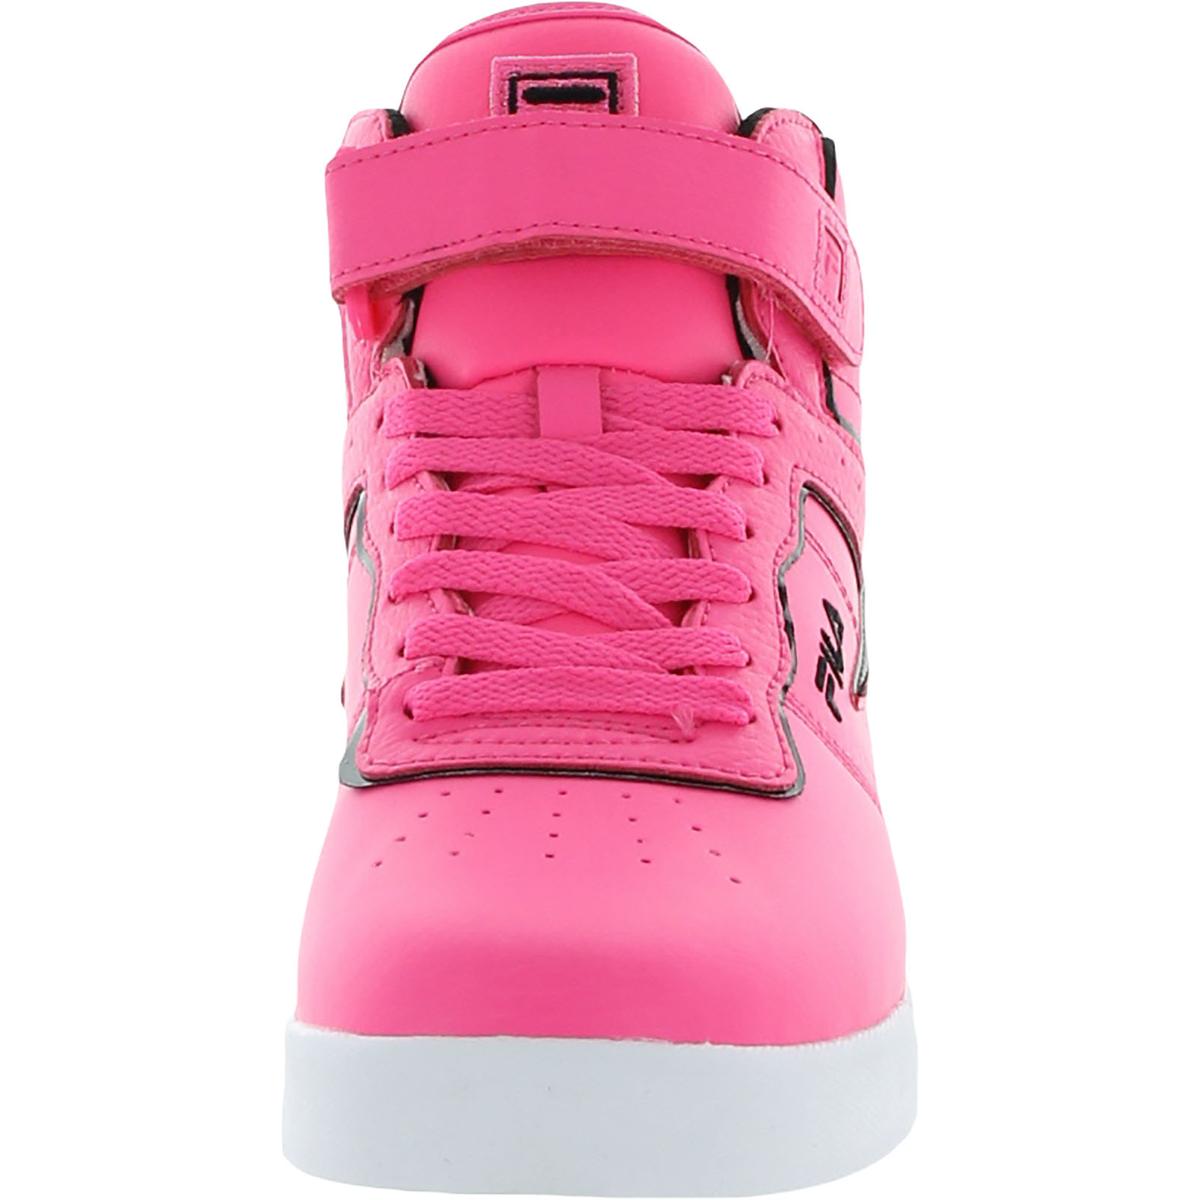 Fila Girls Vulc 13 Top Block High Top Sneakers 6.5 Medium (B,M) Big Kid ...